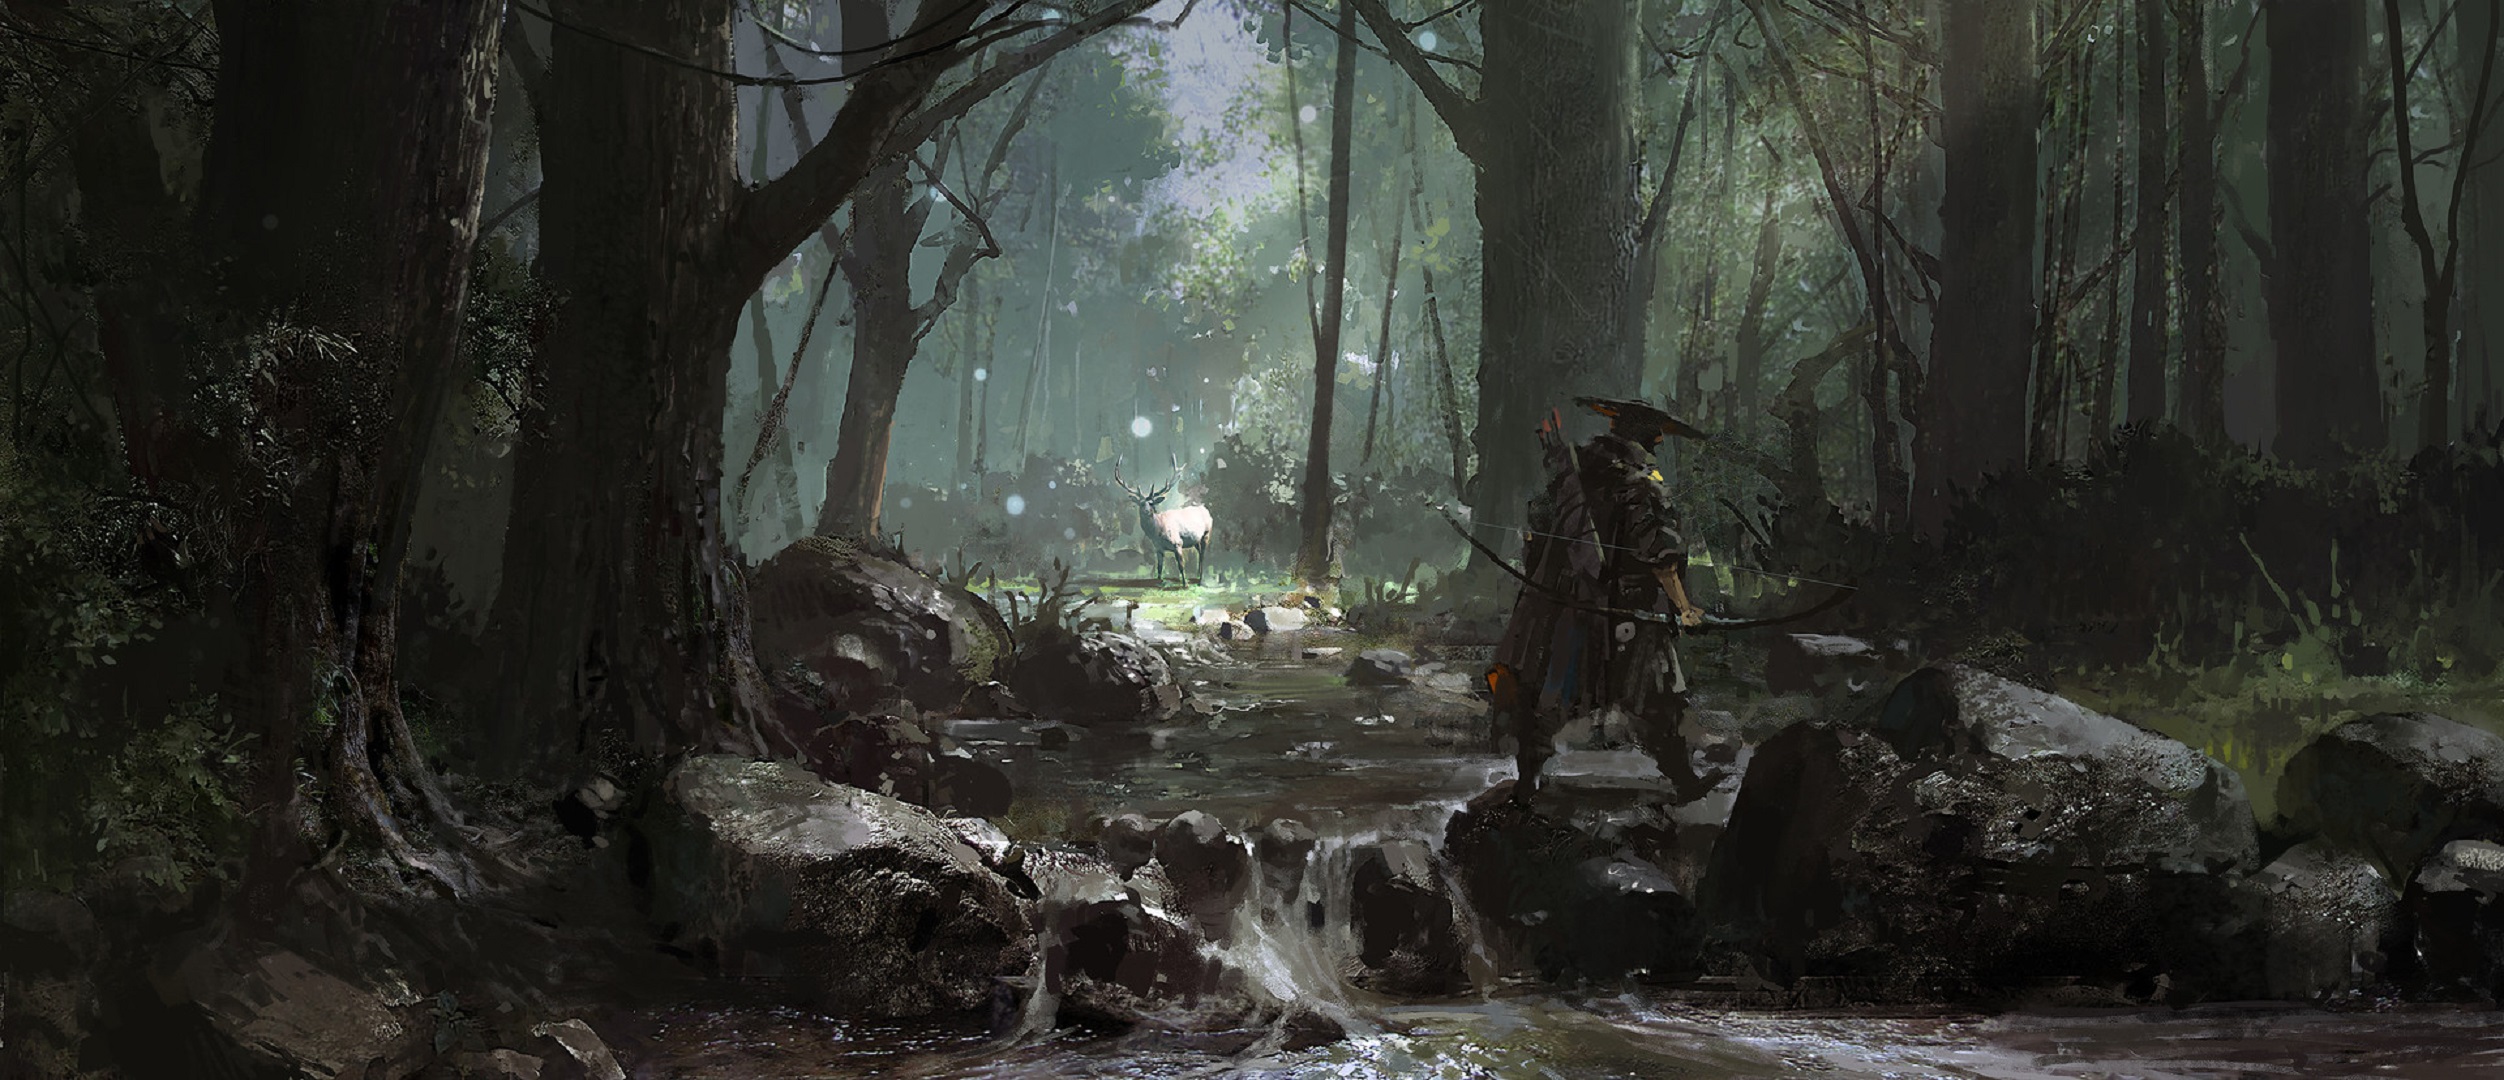 Digital Art Hunter Warrior Landscape Arc River Forest Fantasy Art Deer Su Jian 2504x1080